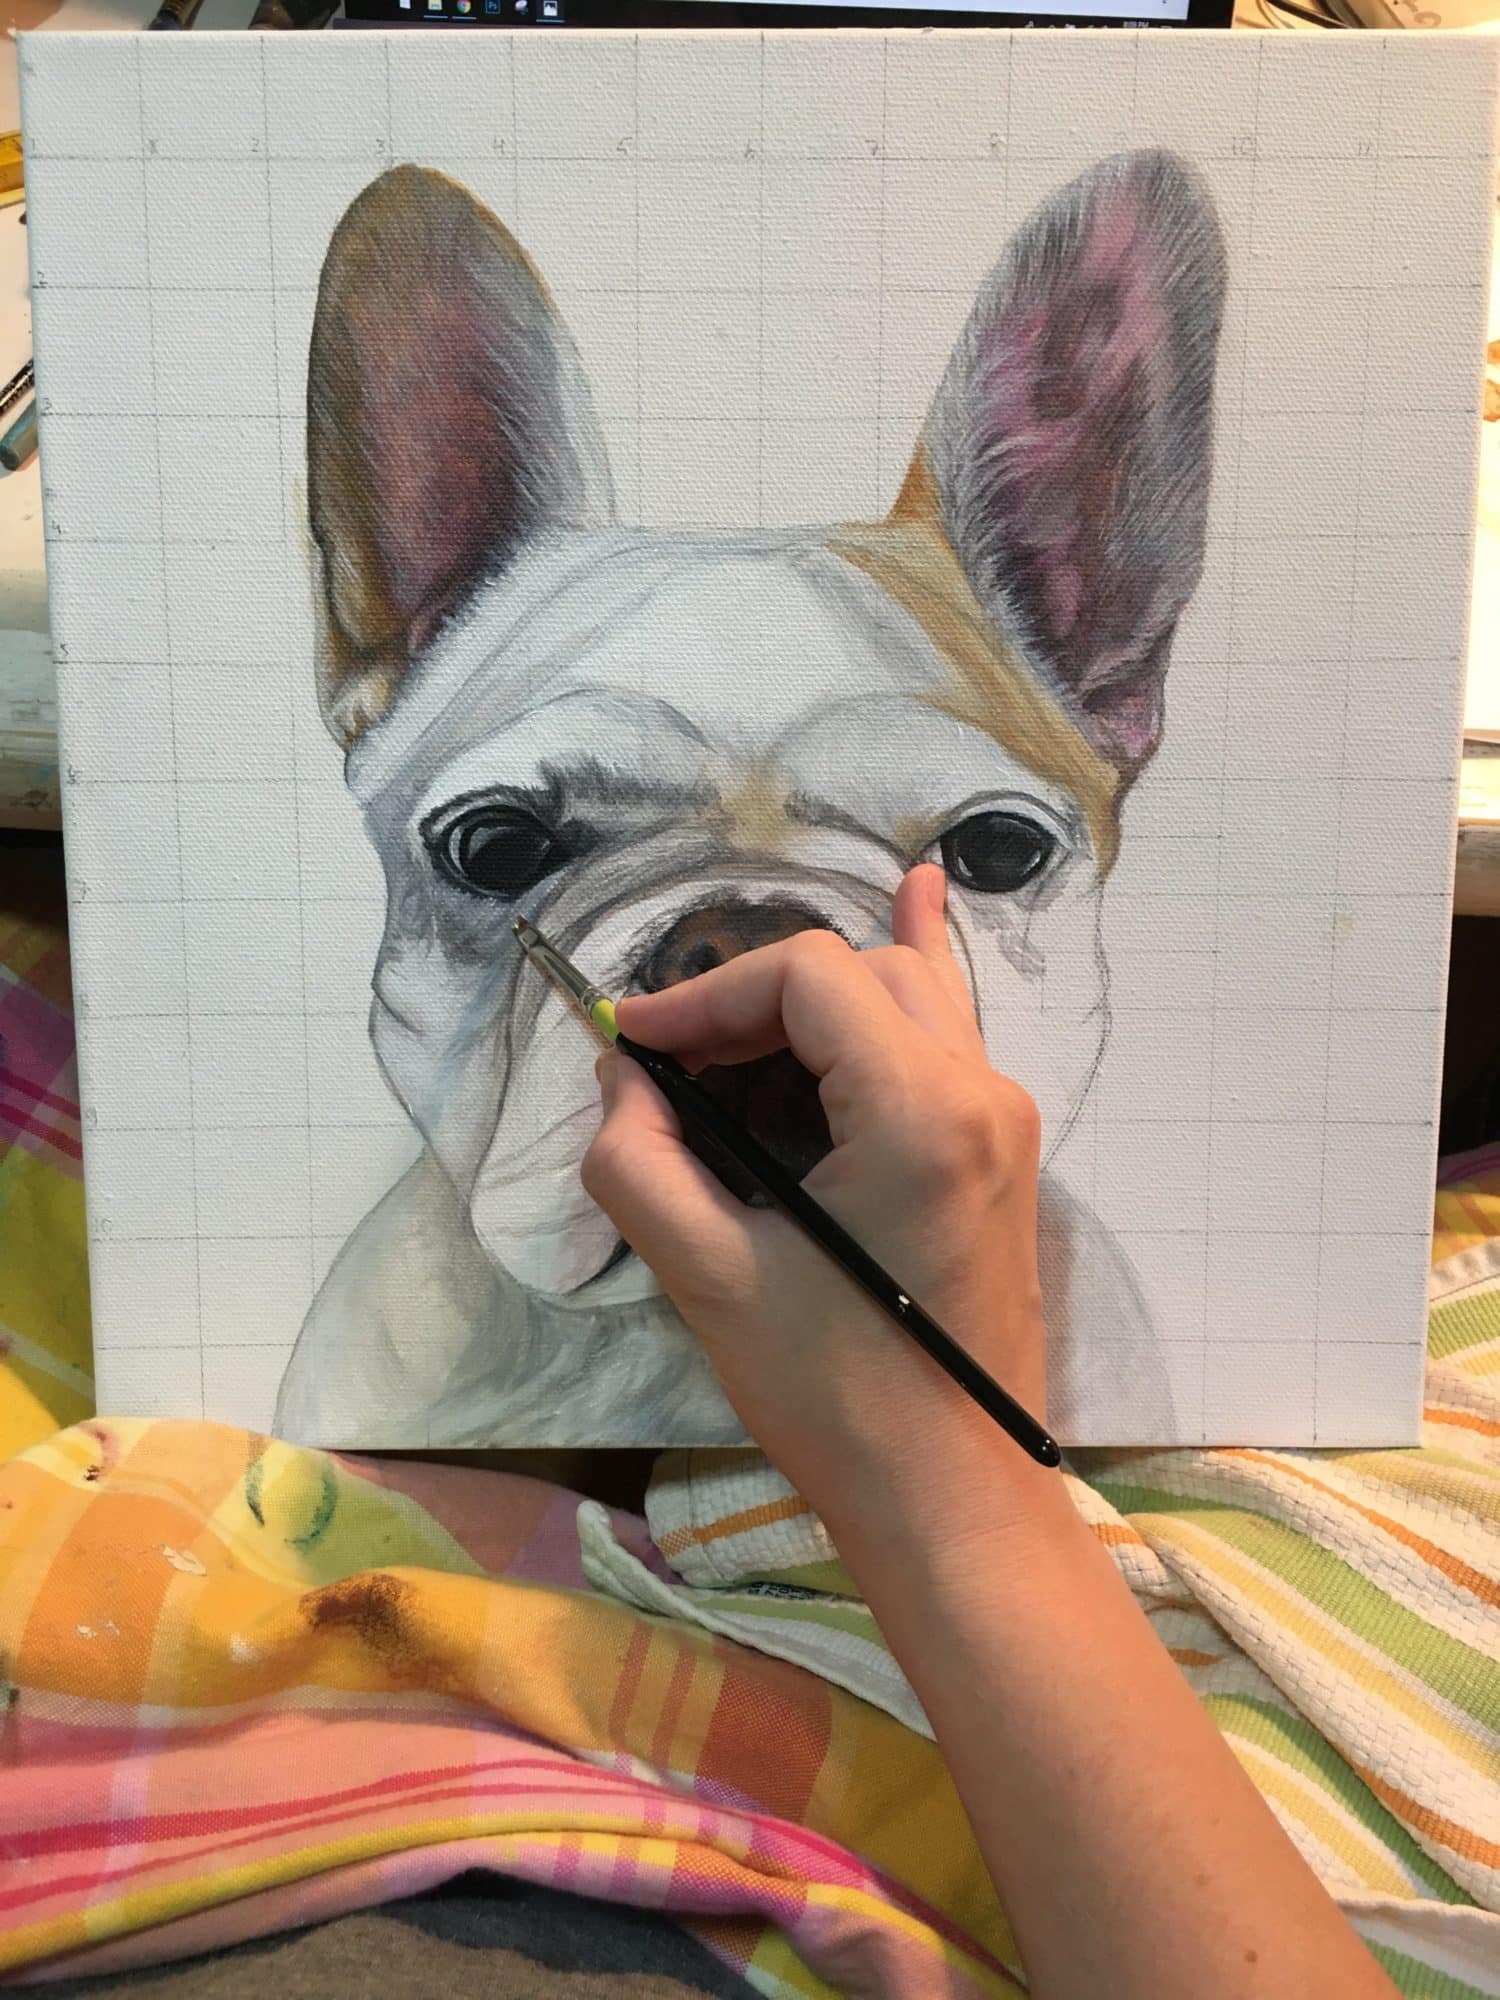 Erica Eriksdotter paints an original painting of a french bulldog